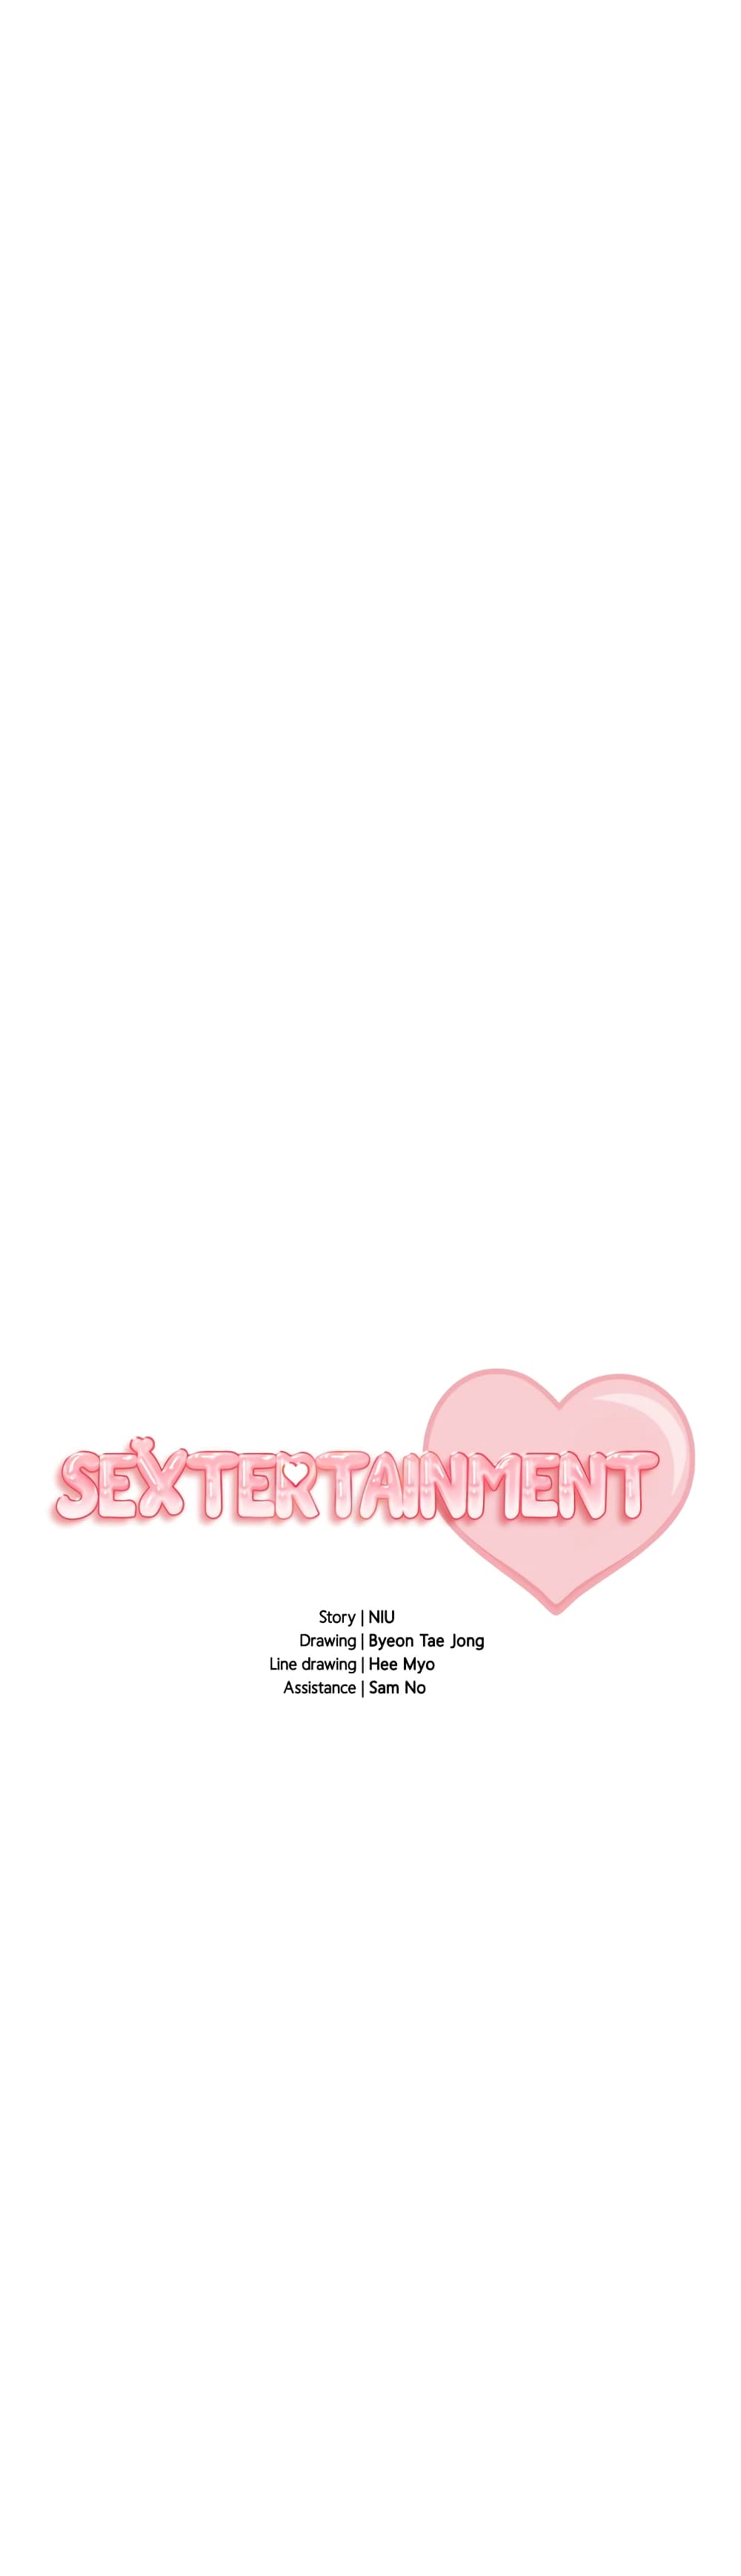 Sextertainment 12-12